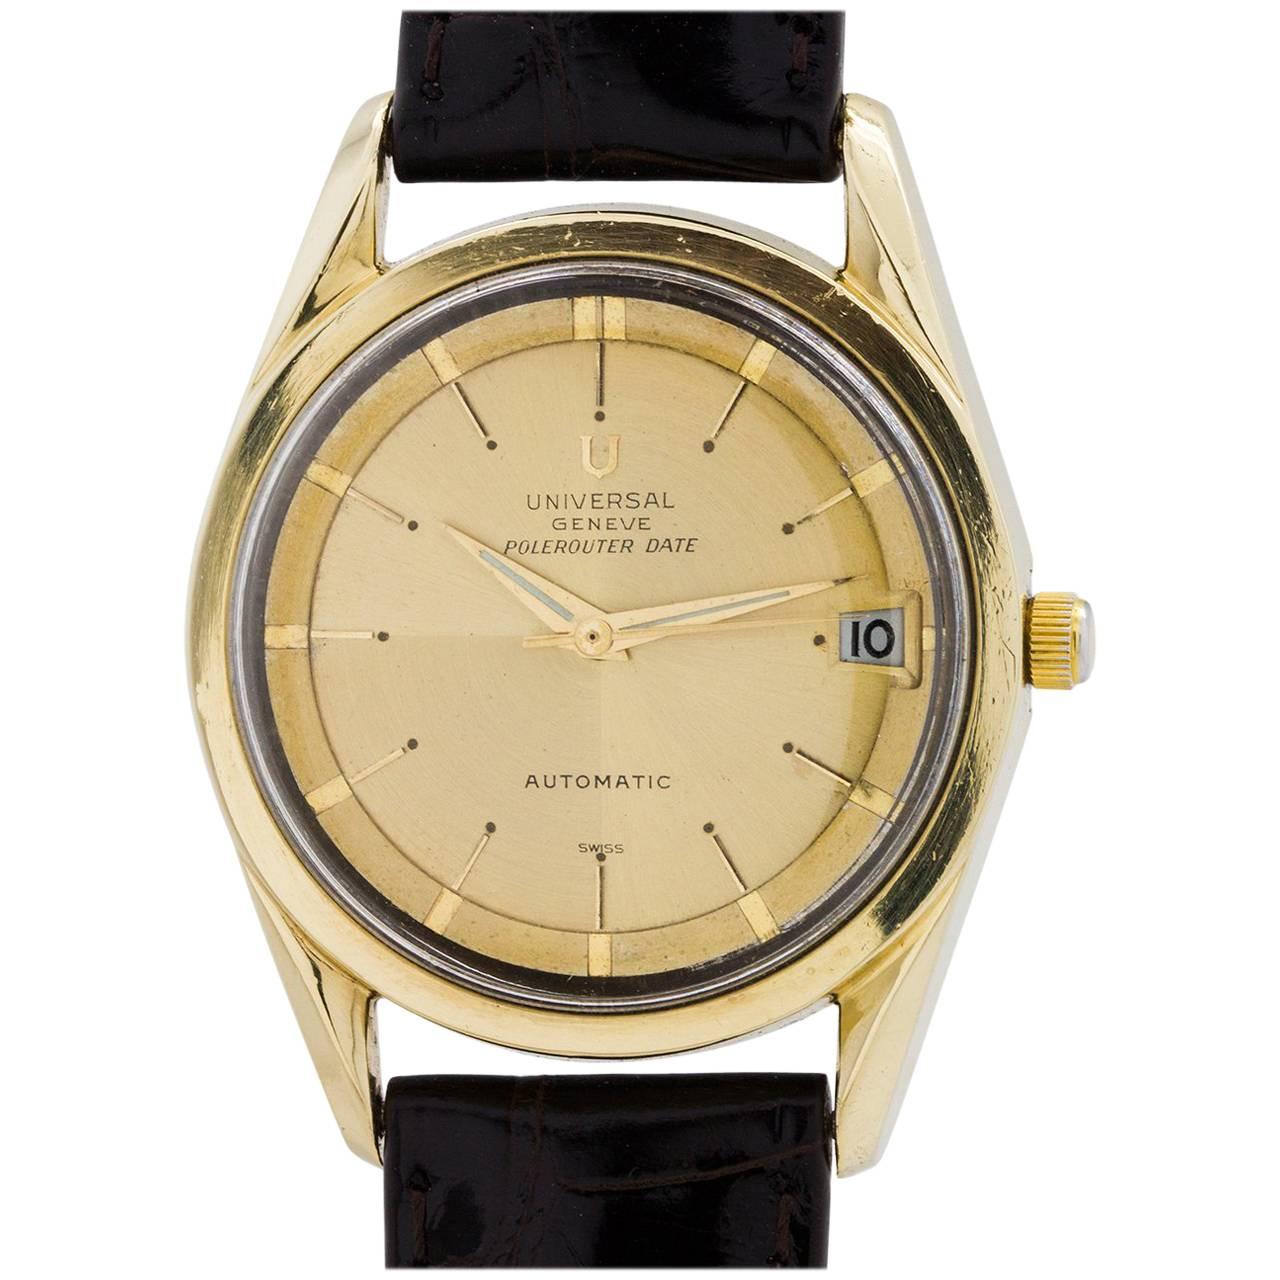 Universal Gold Plate Geneve Polerouter De Luxe Chronometer Wristwatch For Sale